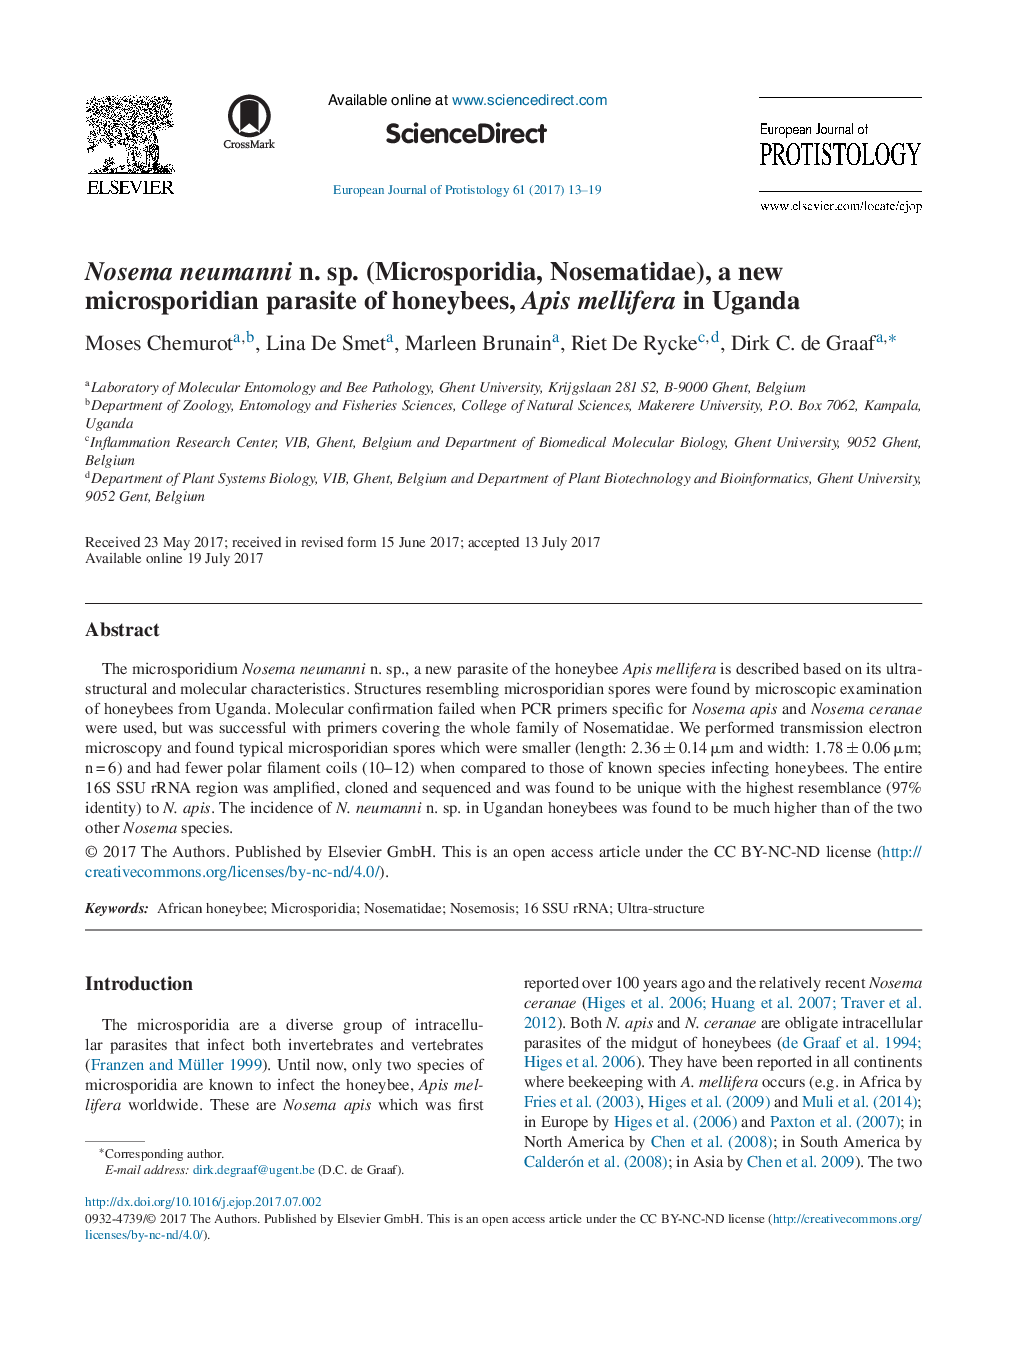 Nosema neumanni n. sp. (Microsporidia, Nosematidae), a new microsporidian parasite of honeybees, Apis mellifera in Uganda